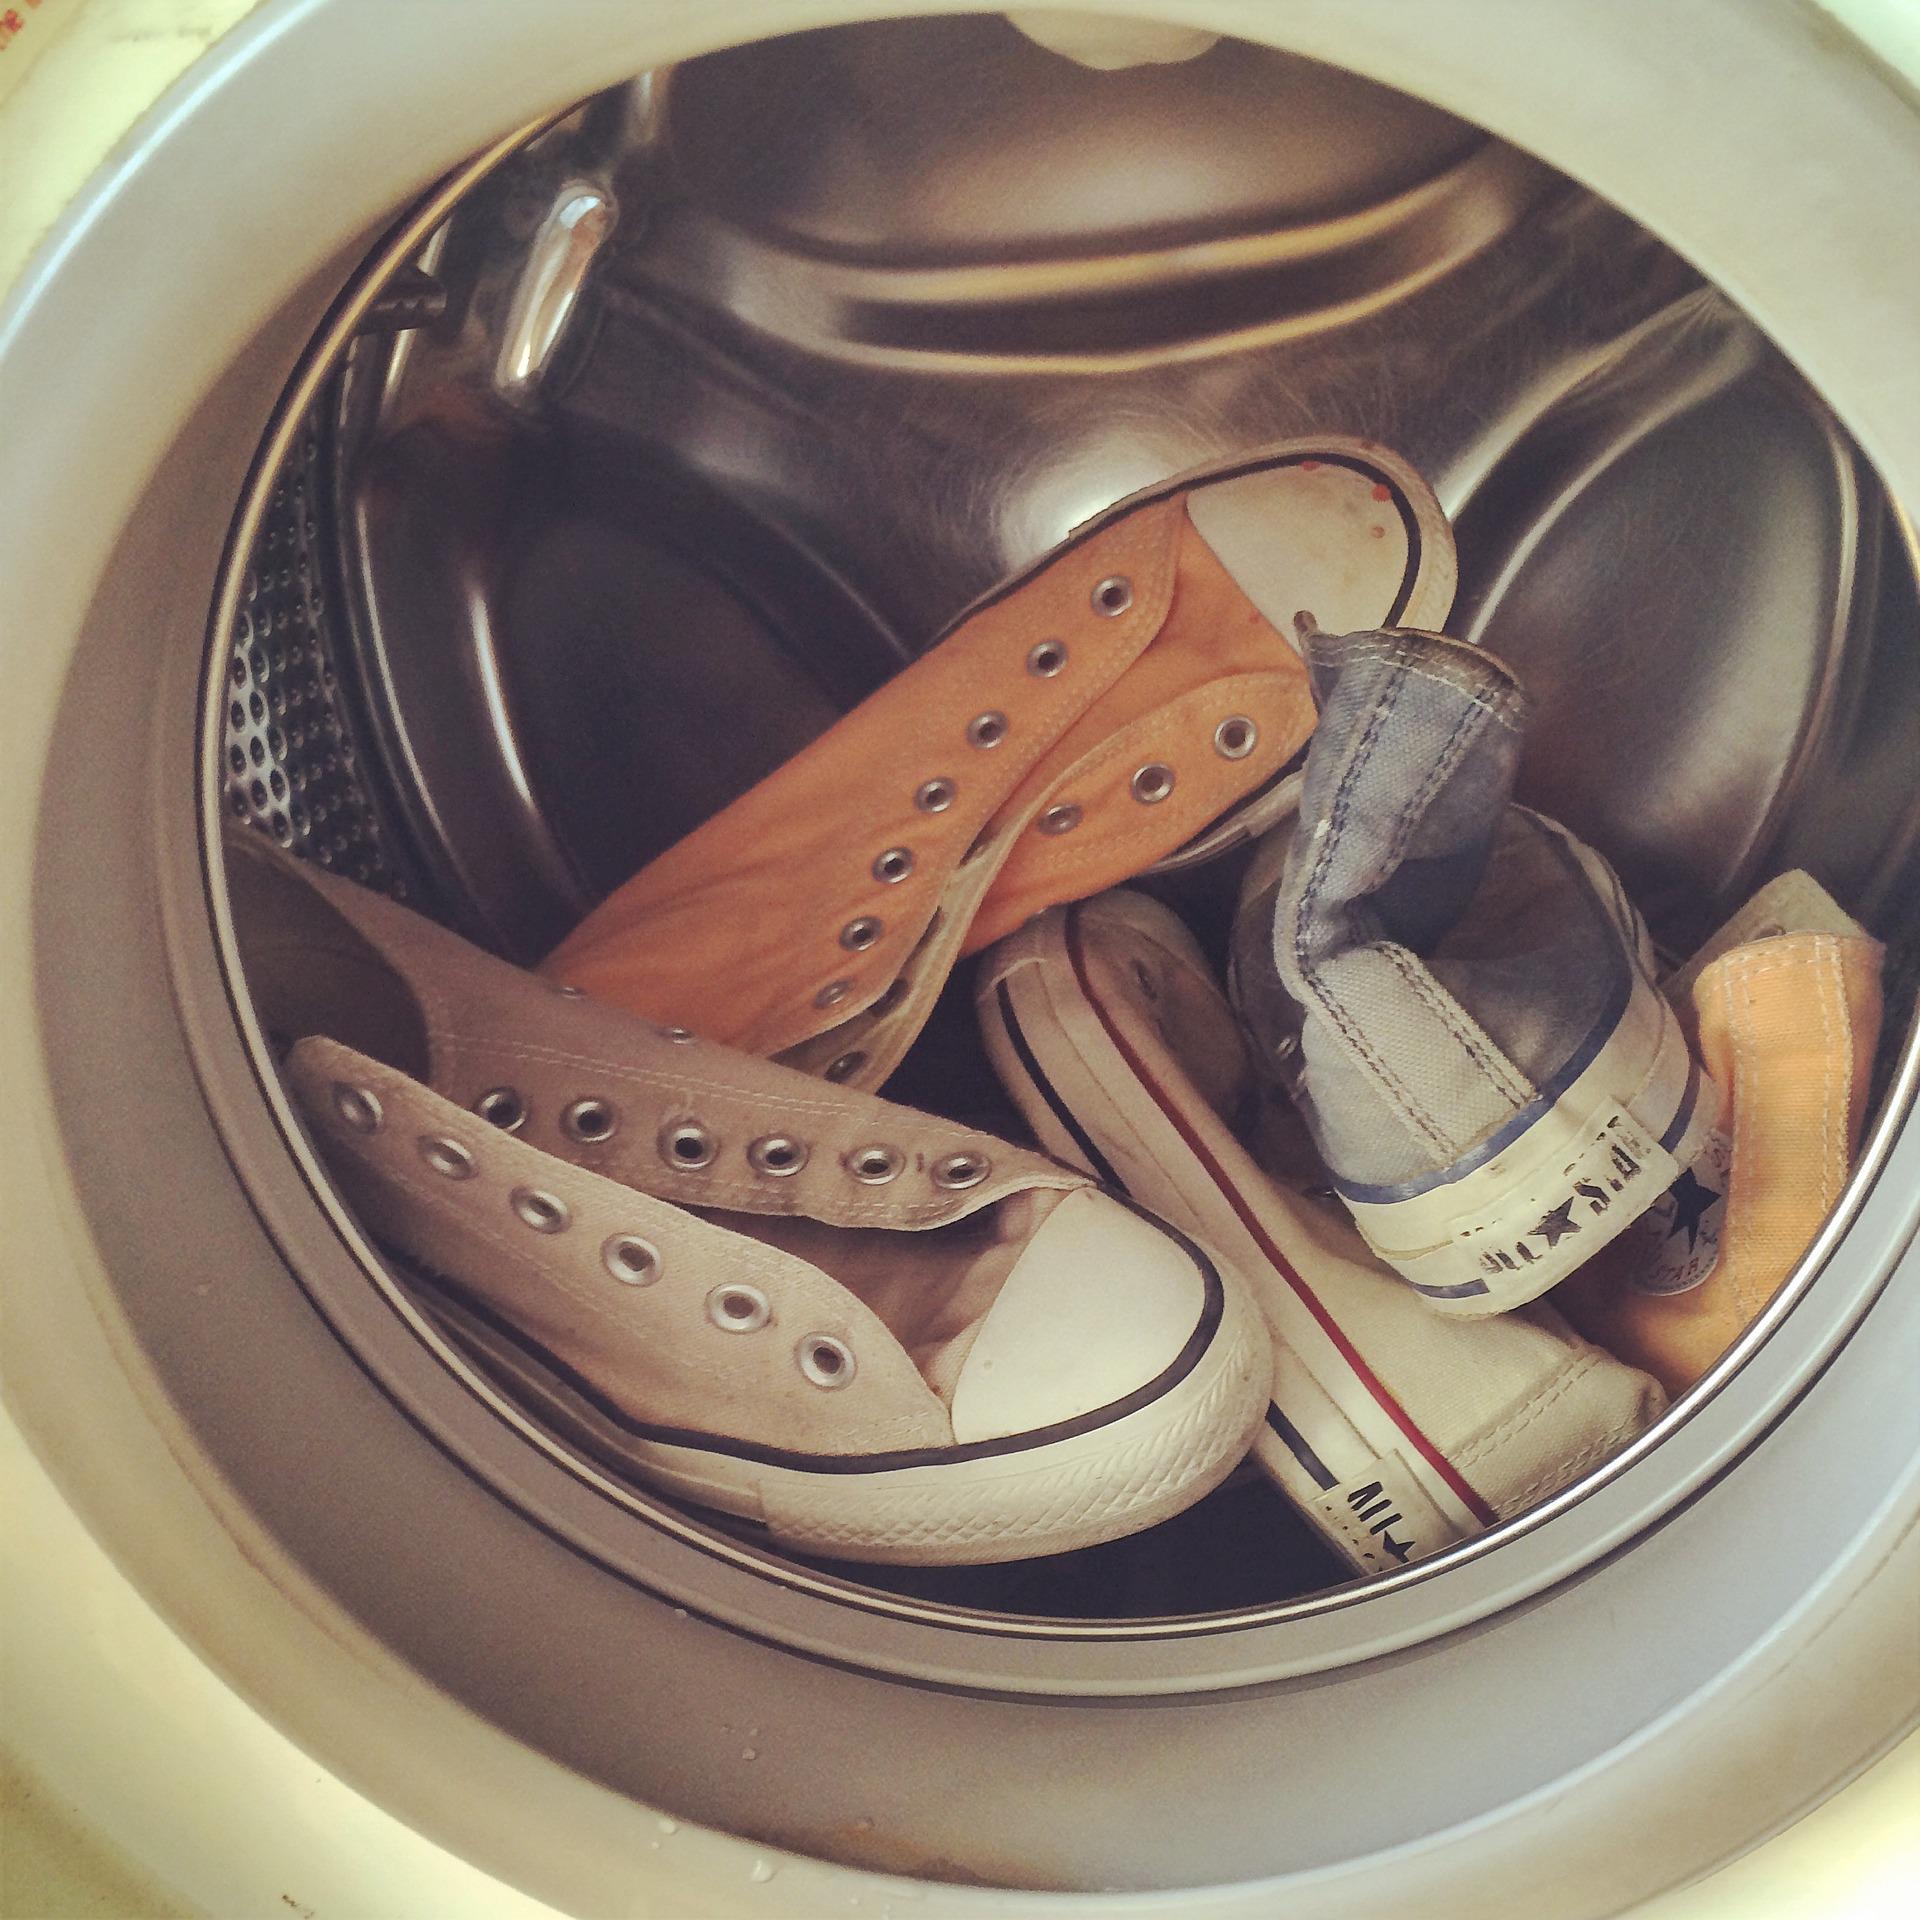 Washing Machine For Shoes